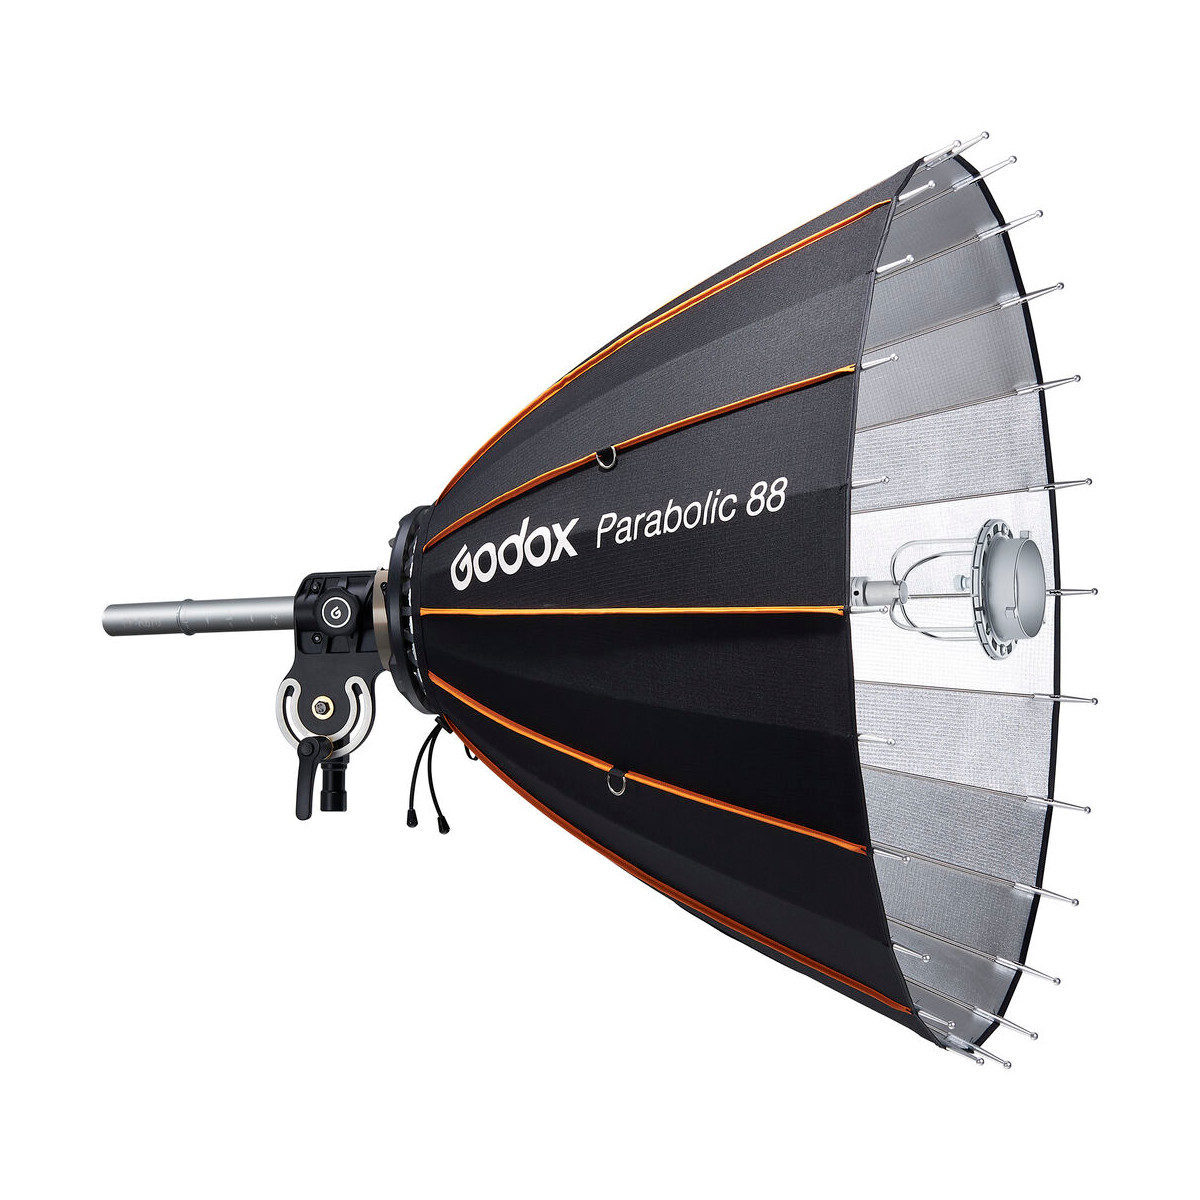 Godox Godox P88 Parabolic Light Focusing System Kit